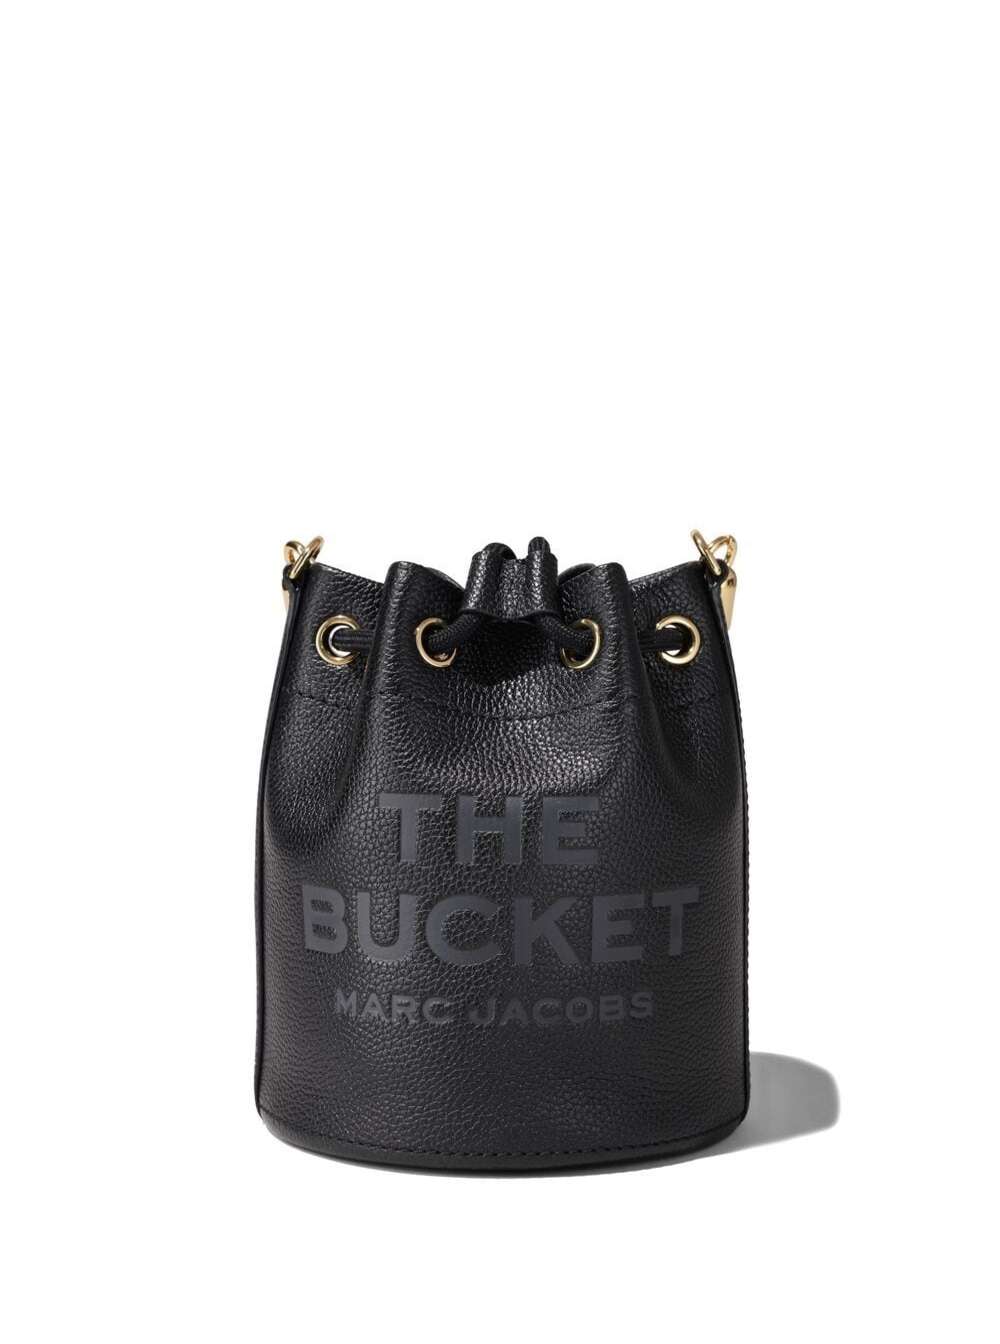 Marc Jacobs The Bucket